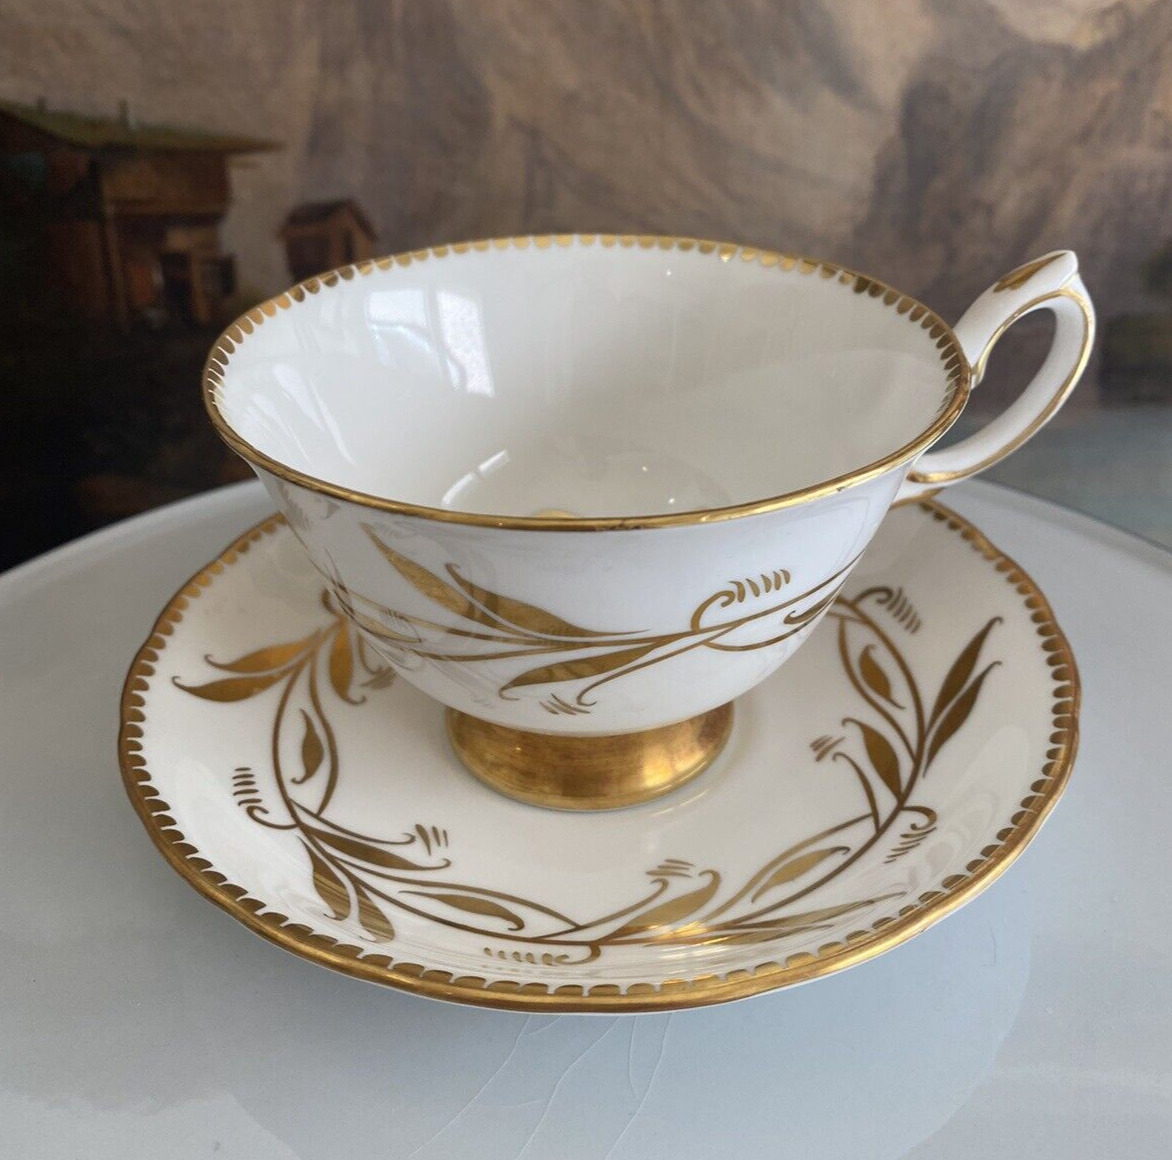 SALE ROYAL CHELSEA Bone China GOLDEN RUSH Tea Cup & Saucer 40s-50s Vintage